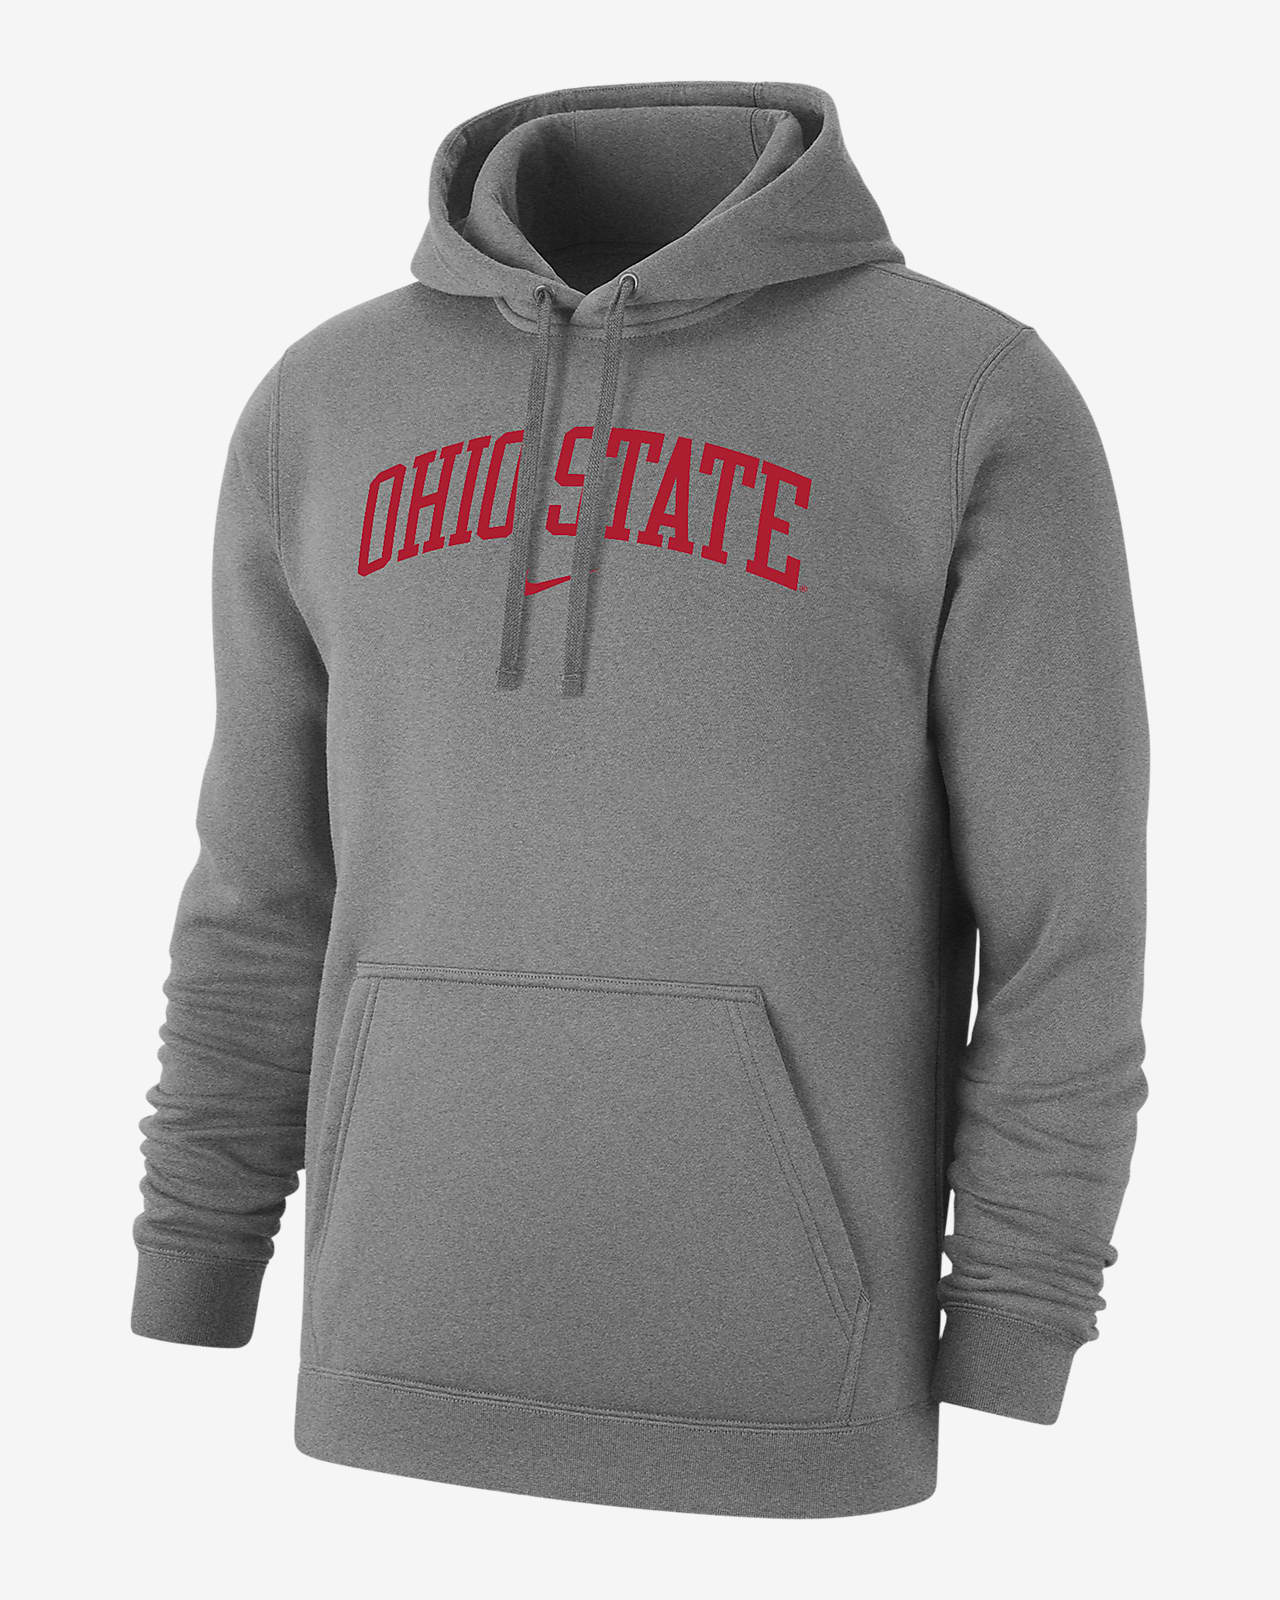 Ohio State Club Fleece Men's Nike College Pullover Hoodie